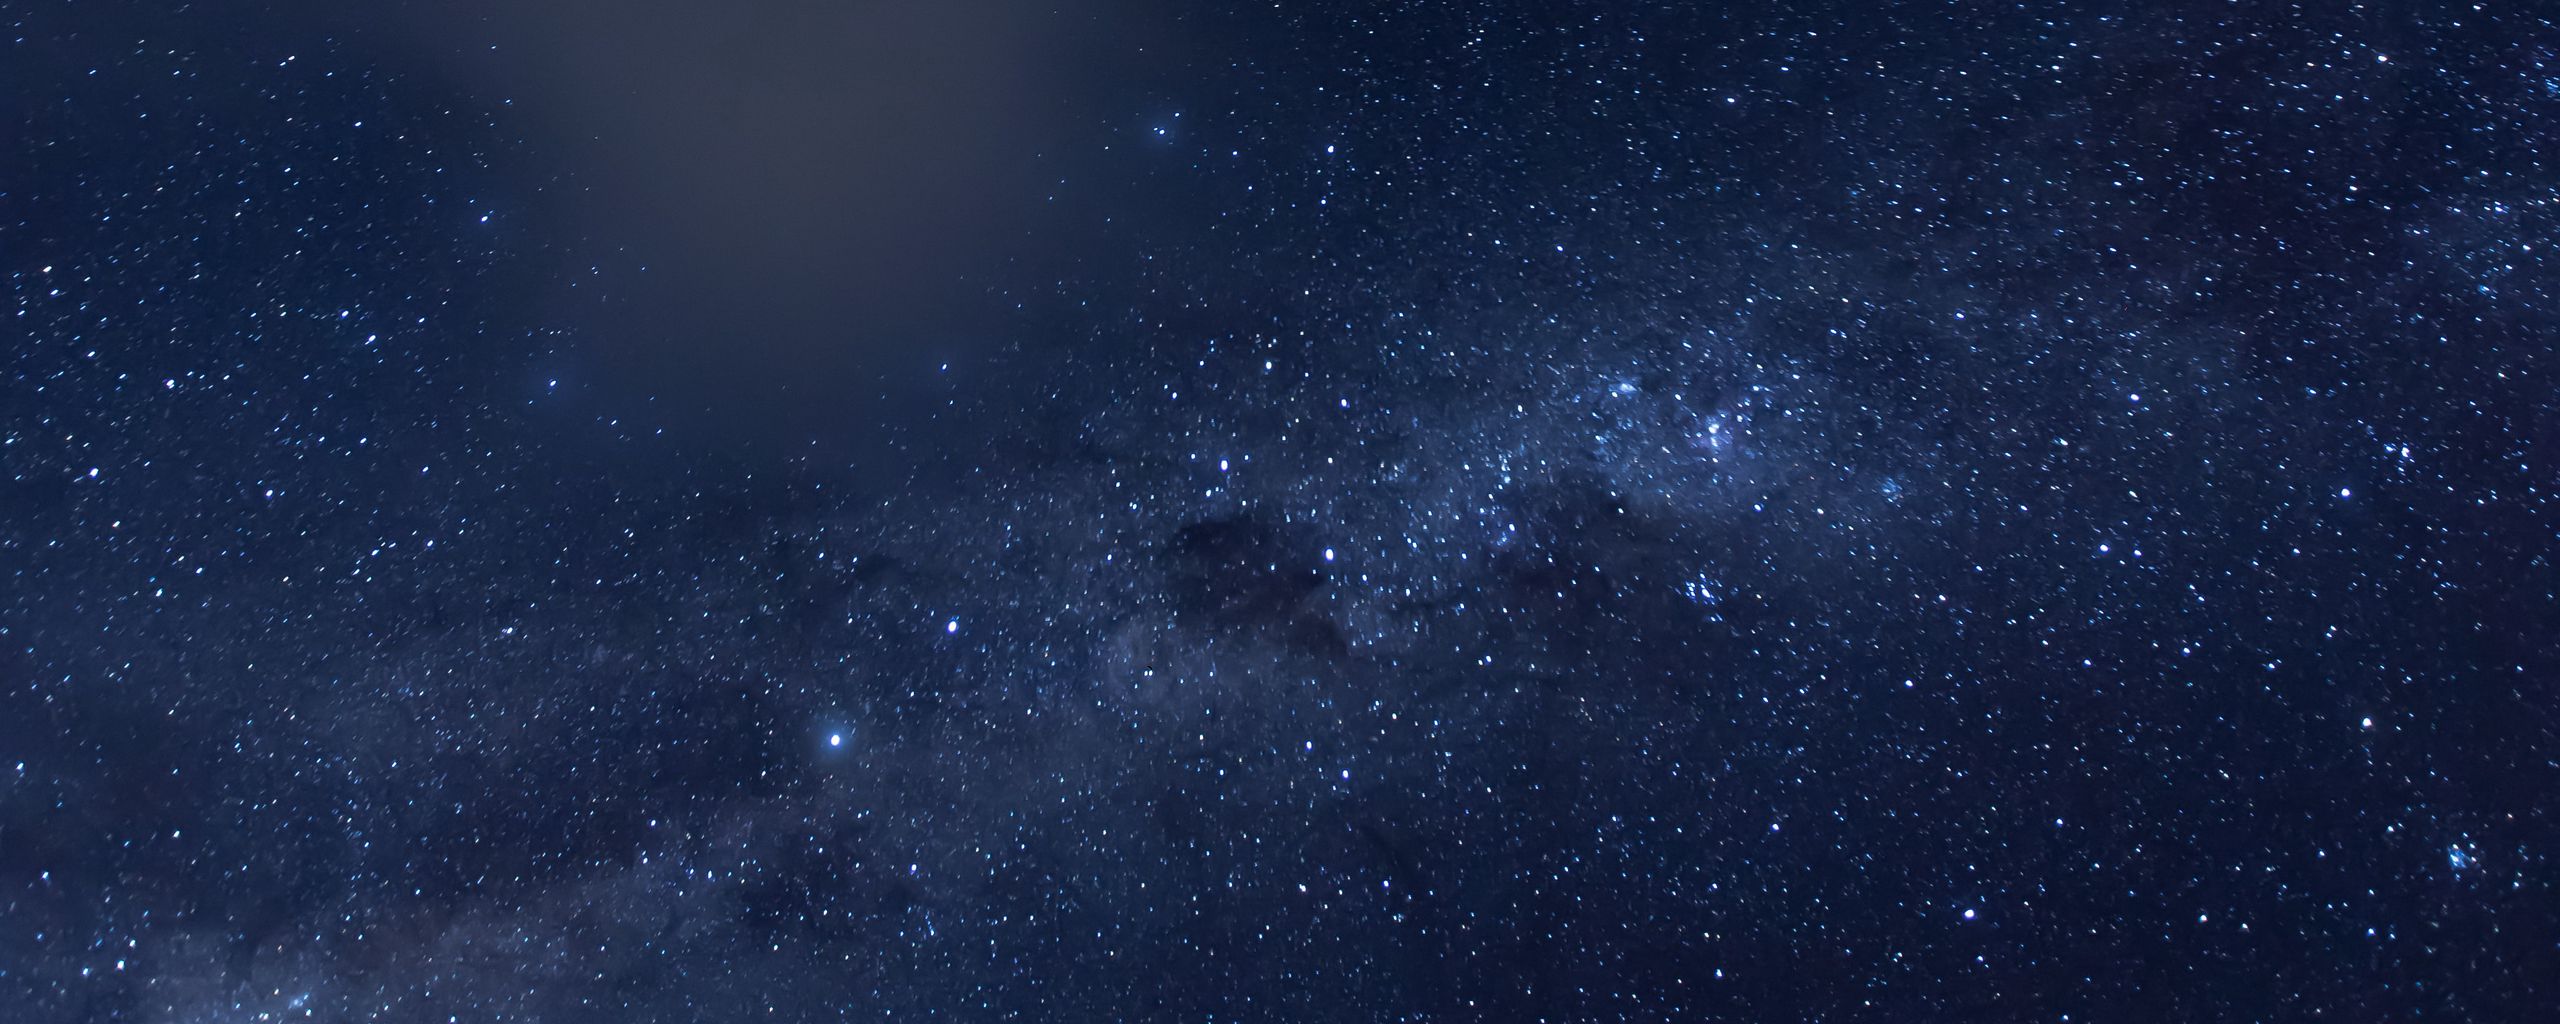 Download wallpaper 2560x1024 stars, starry sky, nebula, galaxy, space ultrawide monitor HD background